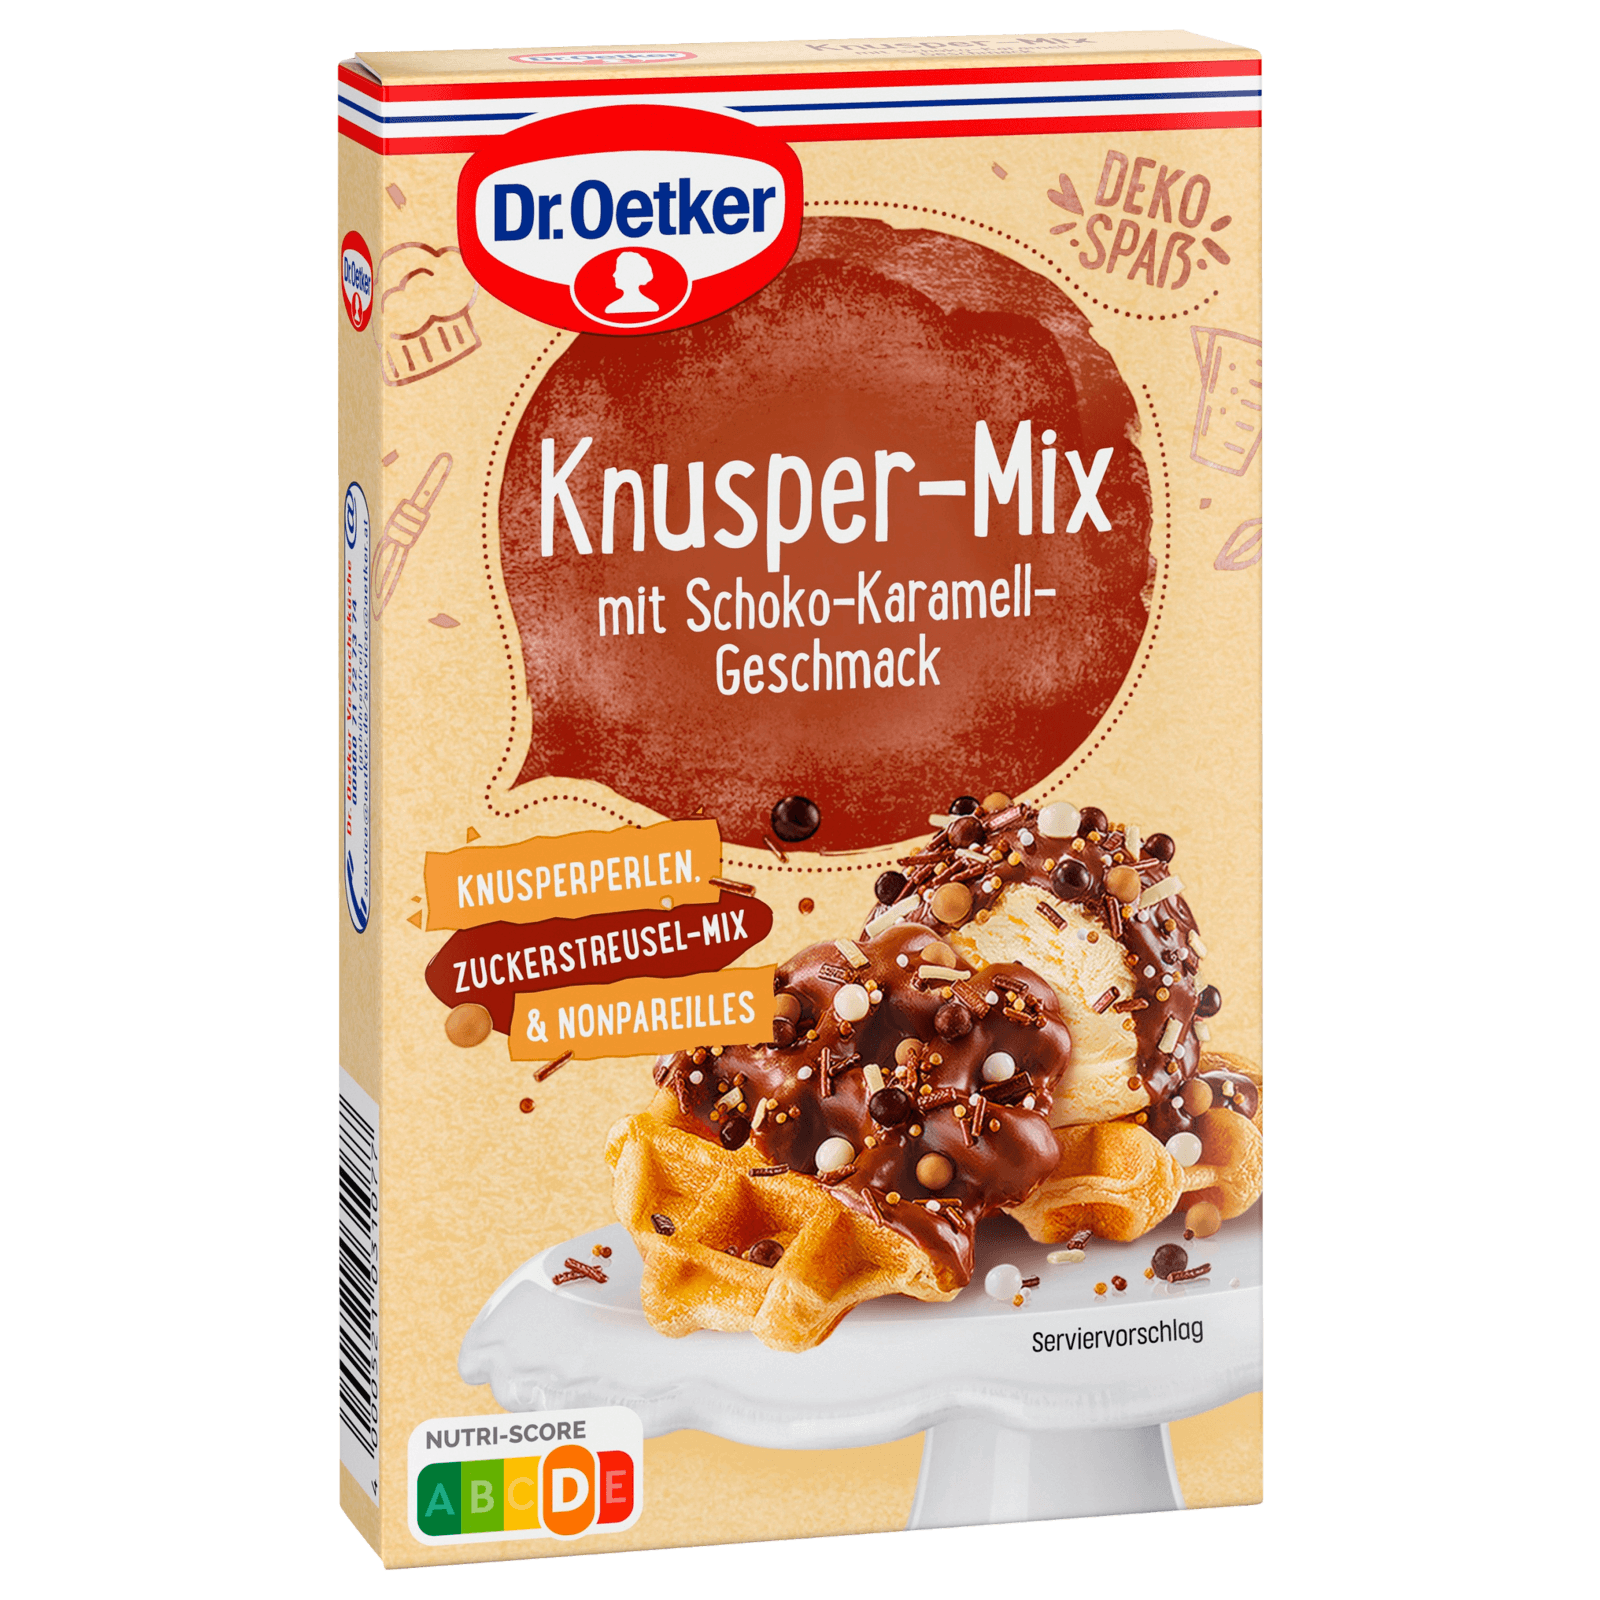 Dr. Oetker Knusper-Mix mit Schoko-Karamell-Geschmack 60g bei REWE ...